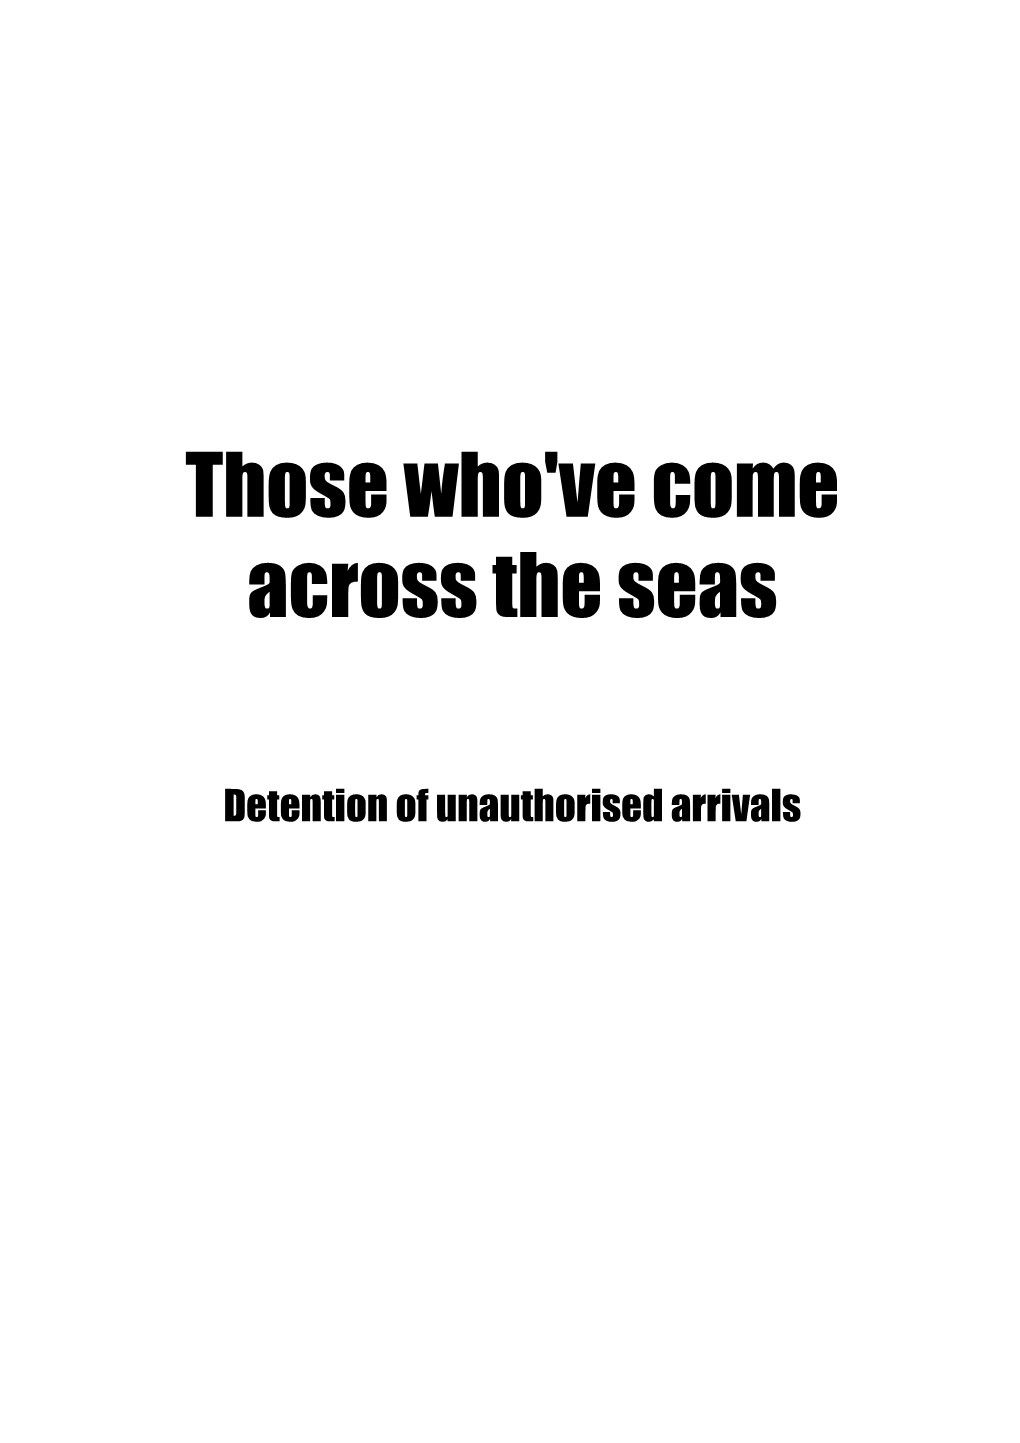 Those Who've Come Across the Seas